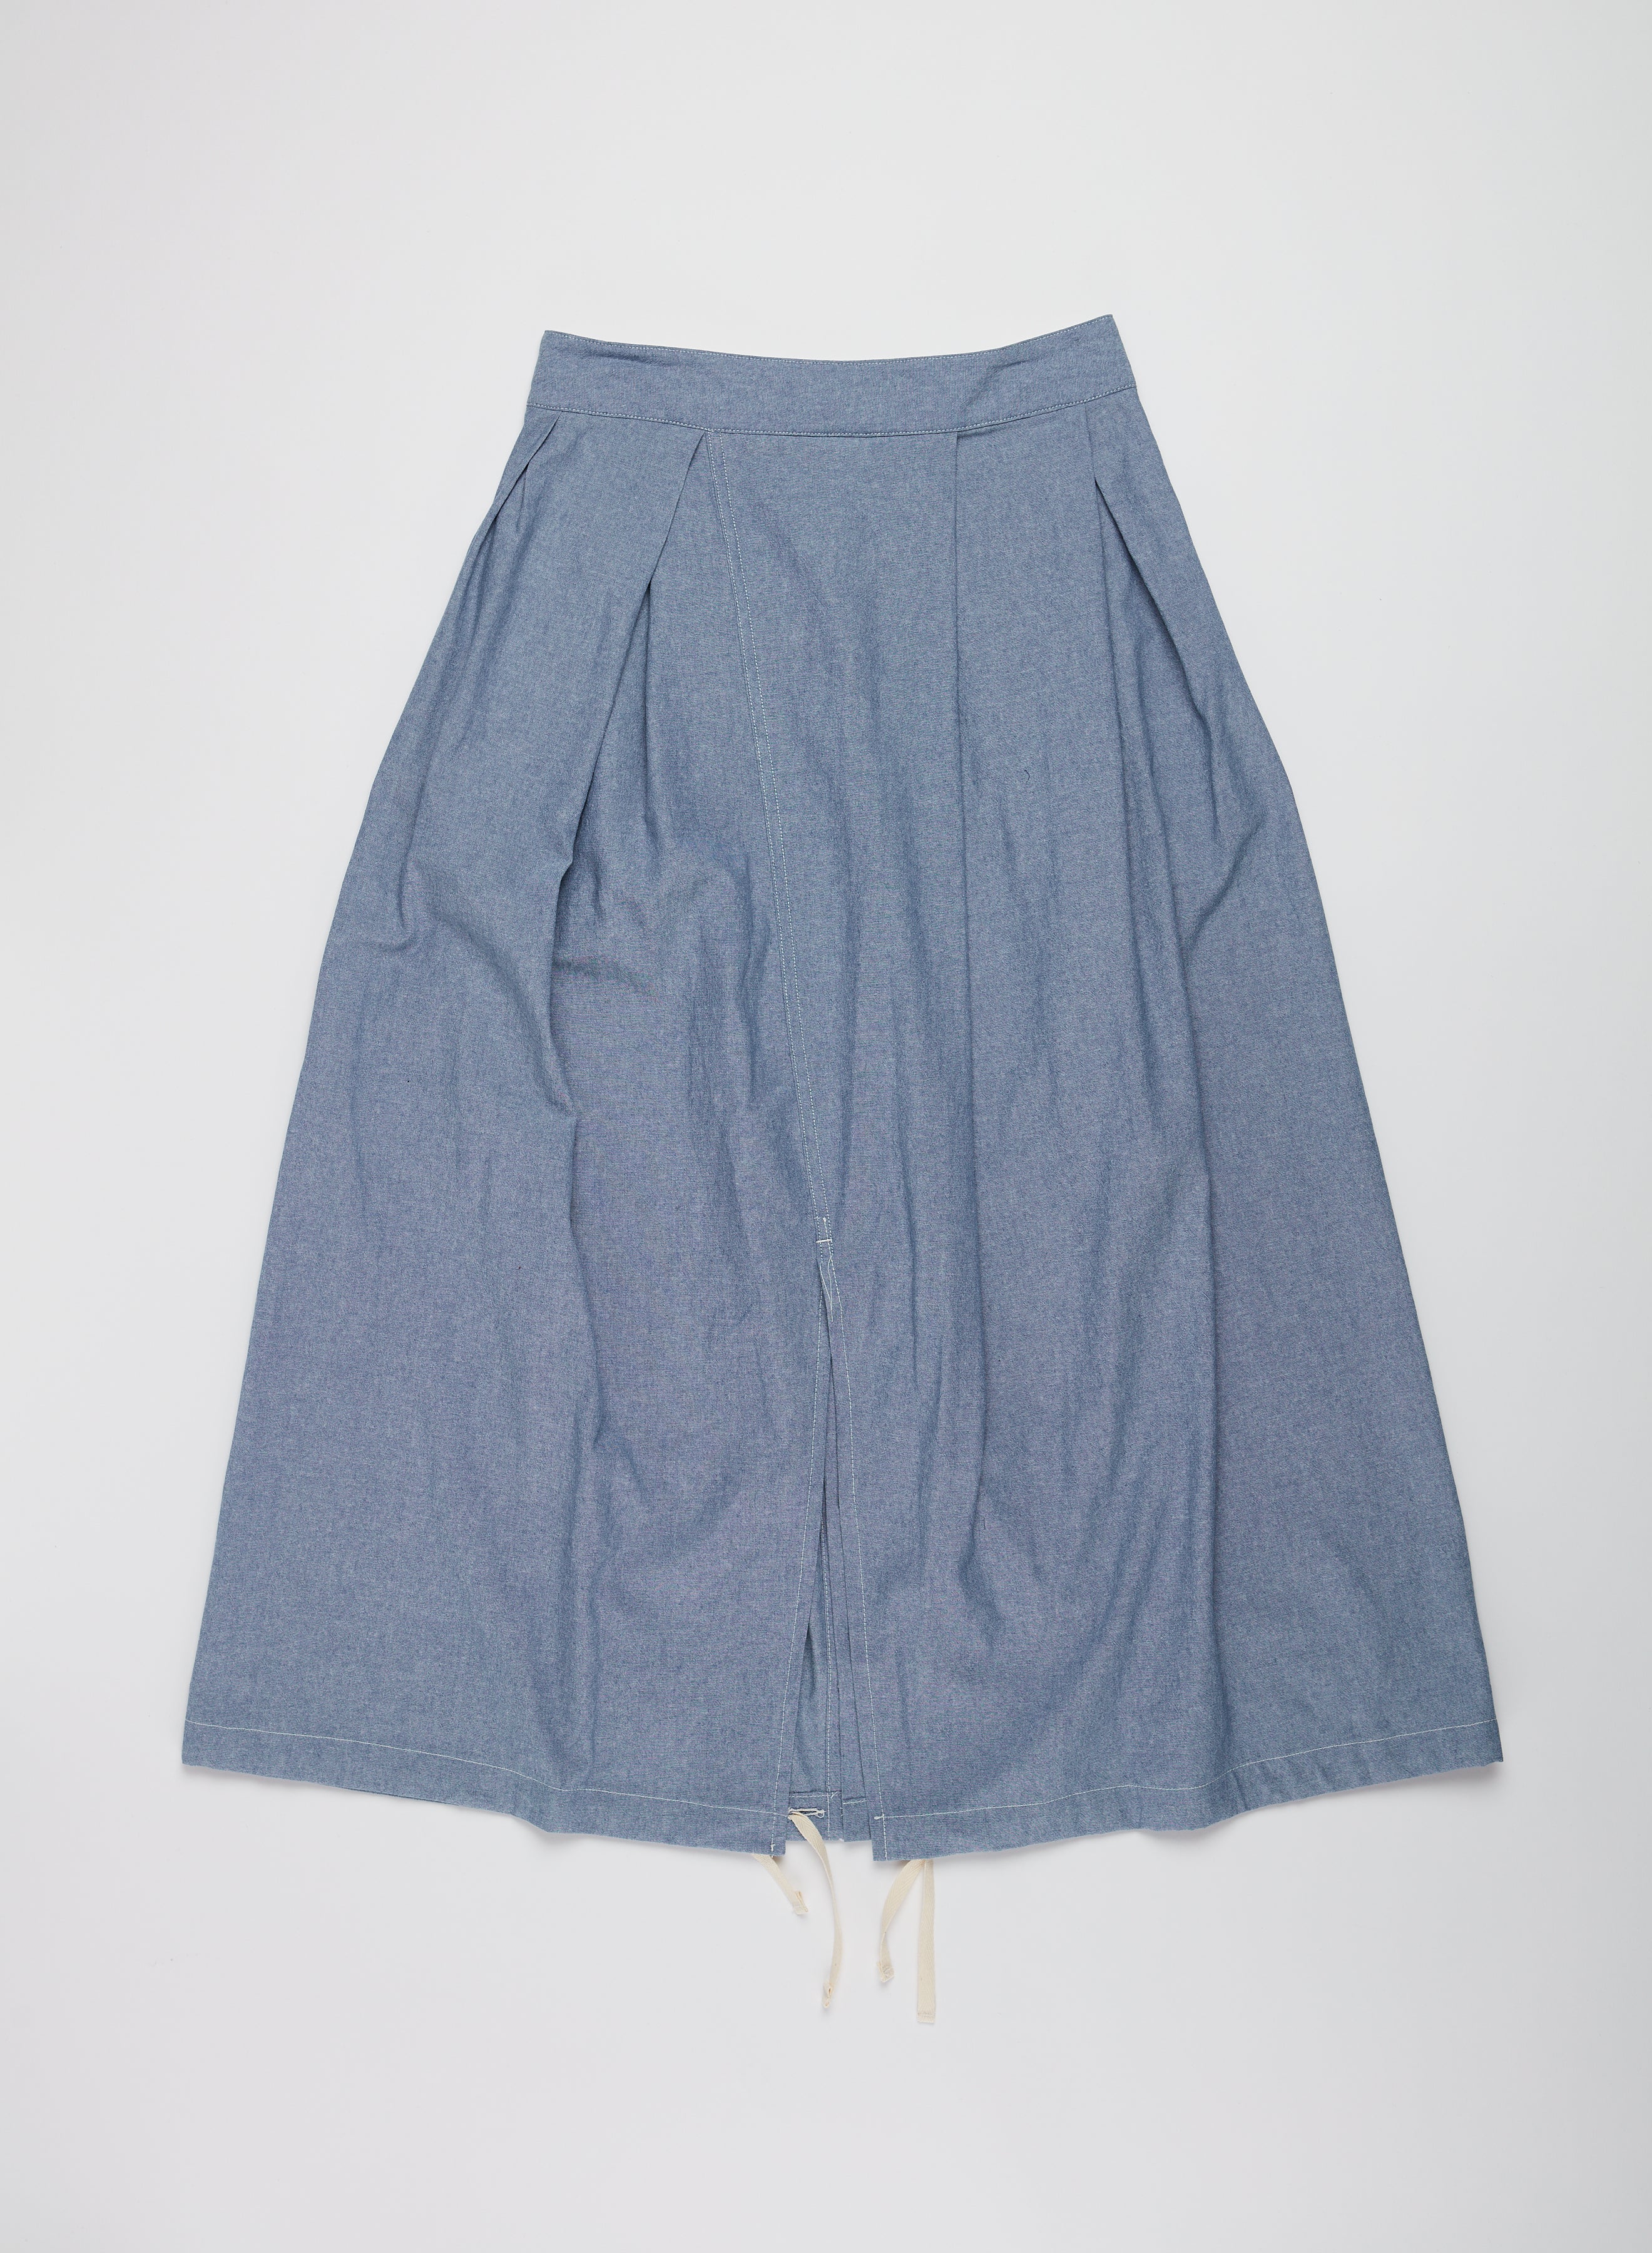 Tuck Skirt - Lt. Blue 4.5oz Cotton Chambray